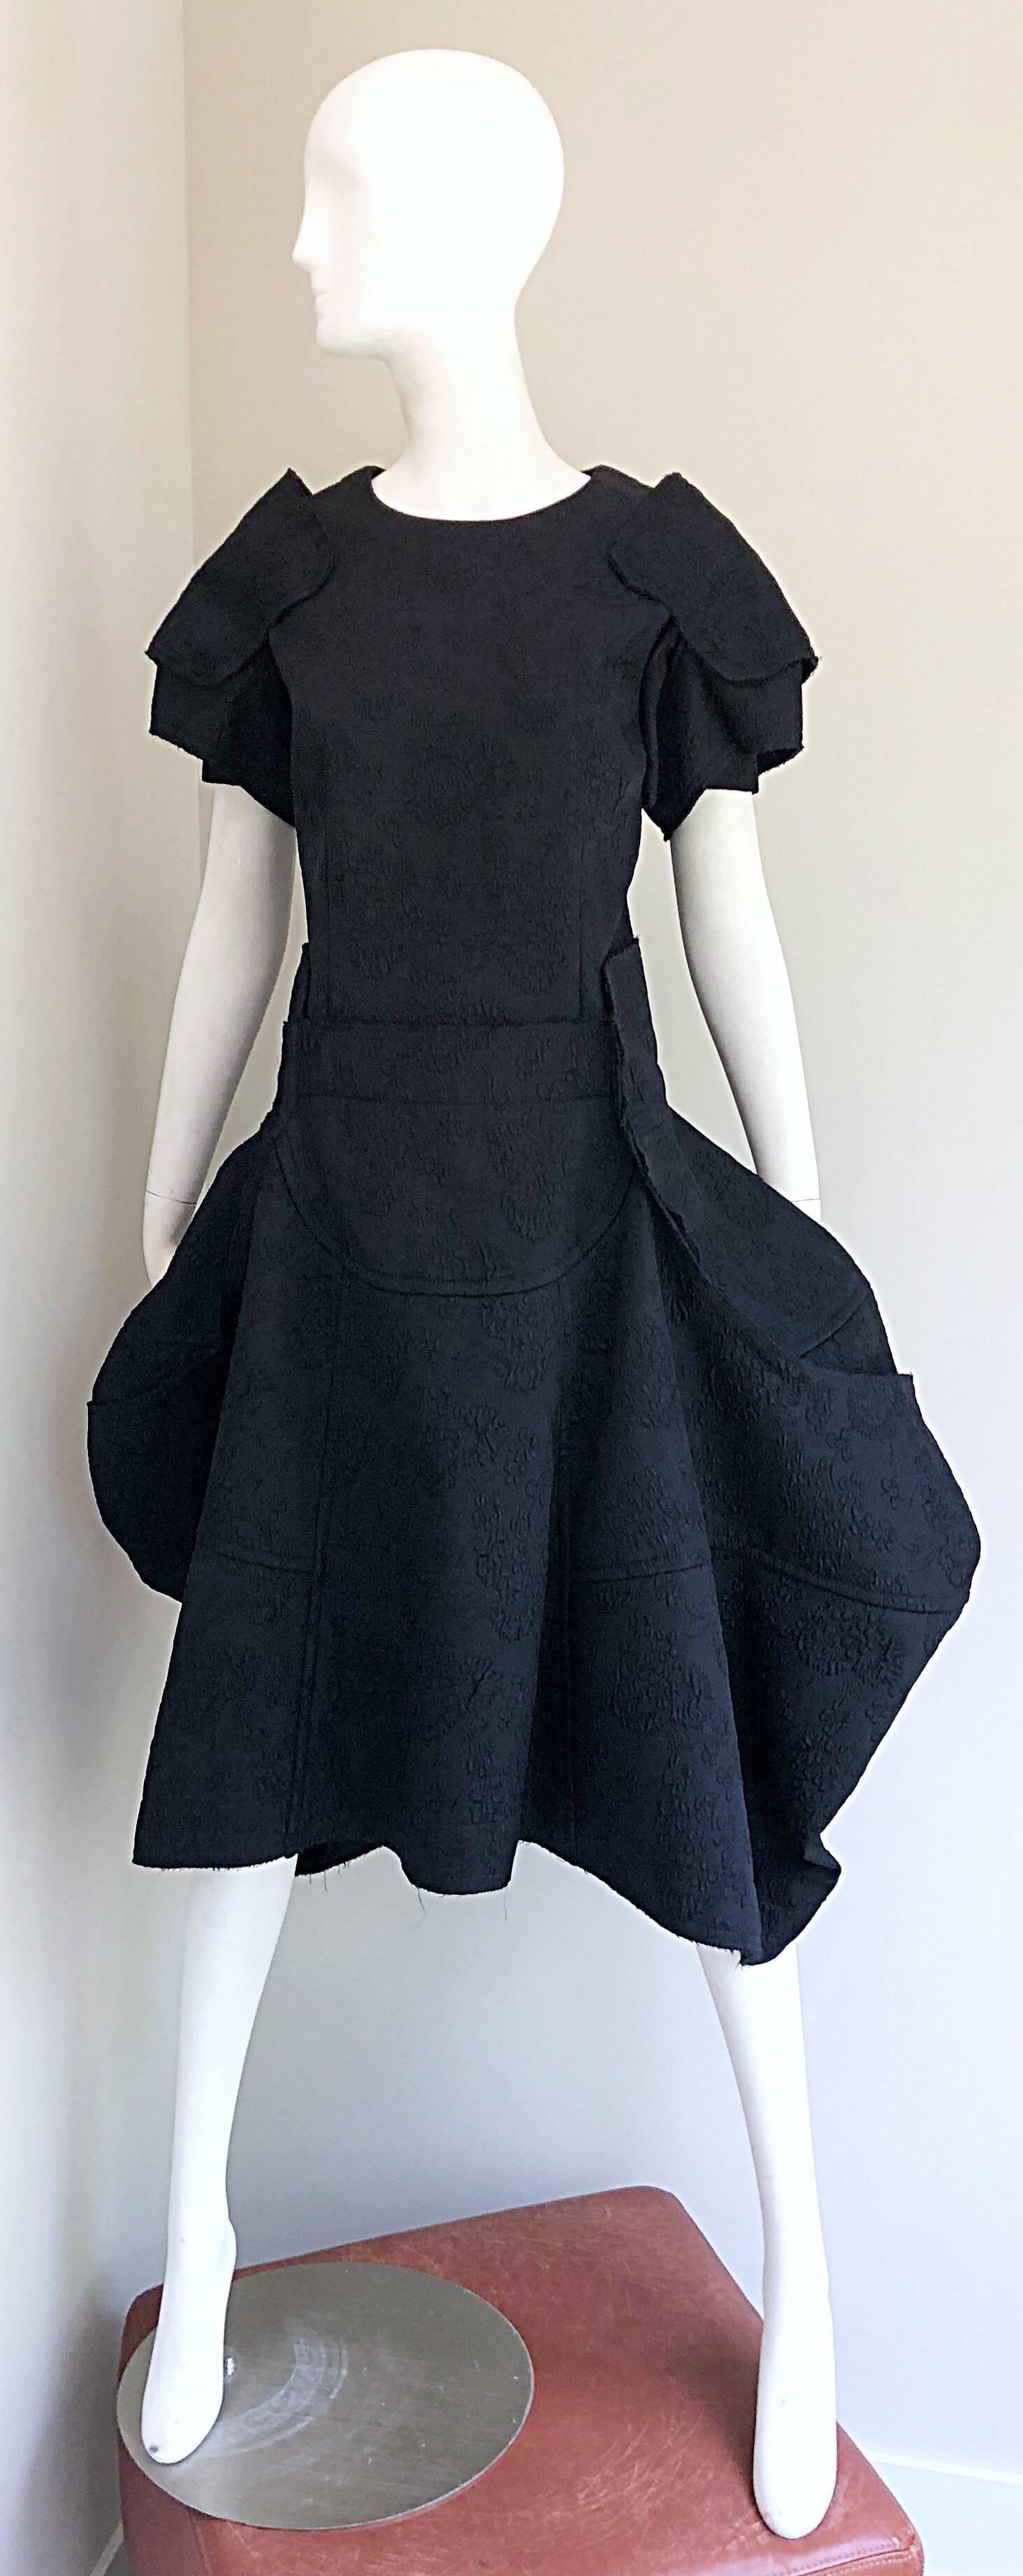 Comme Des Garcons Samurai 2016 Collection Black Avant Garde Collectible Dress 6